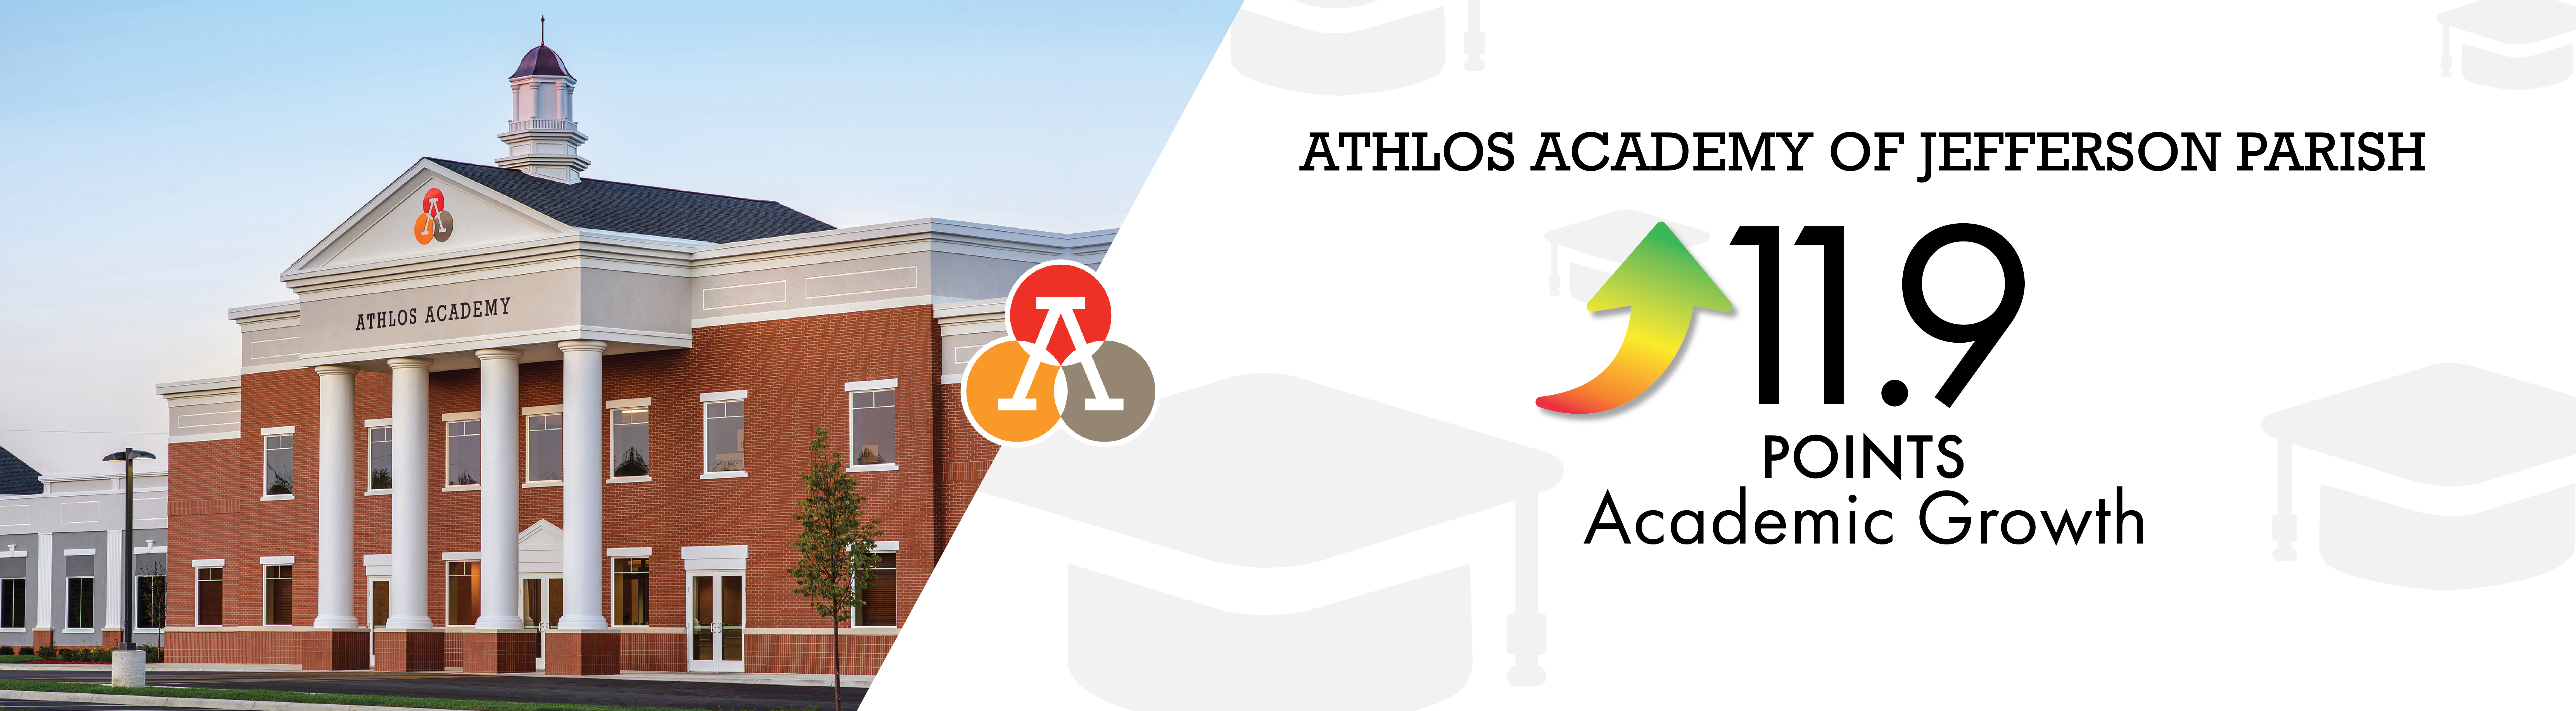 Athlos Academy on Track to Achieve Academic Goals